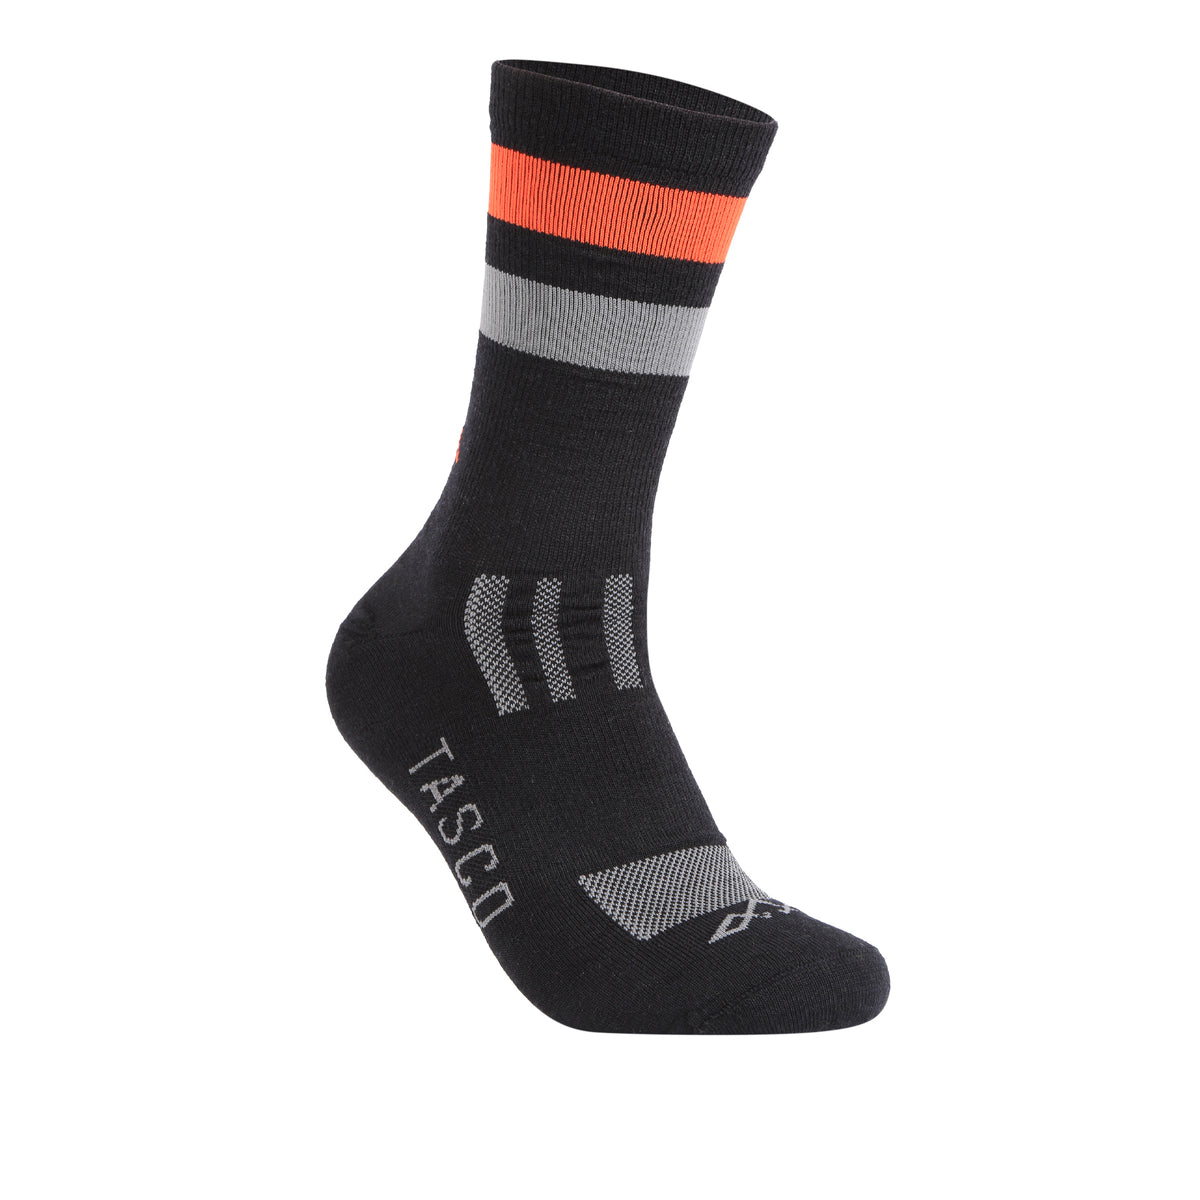 RideTrek Merino Wool Socks - Classic Black / Orange